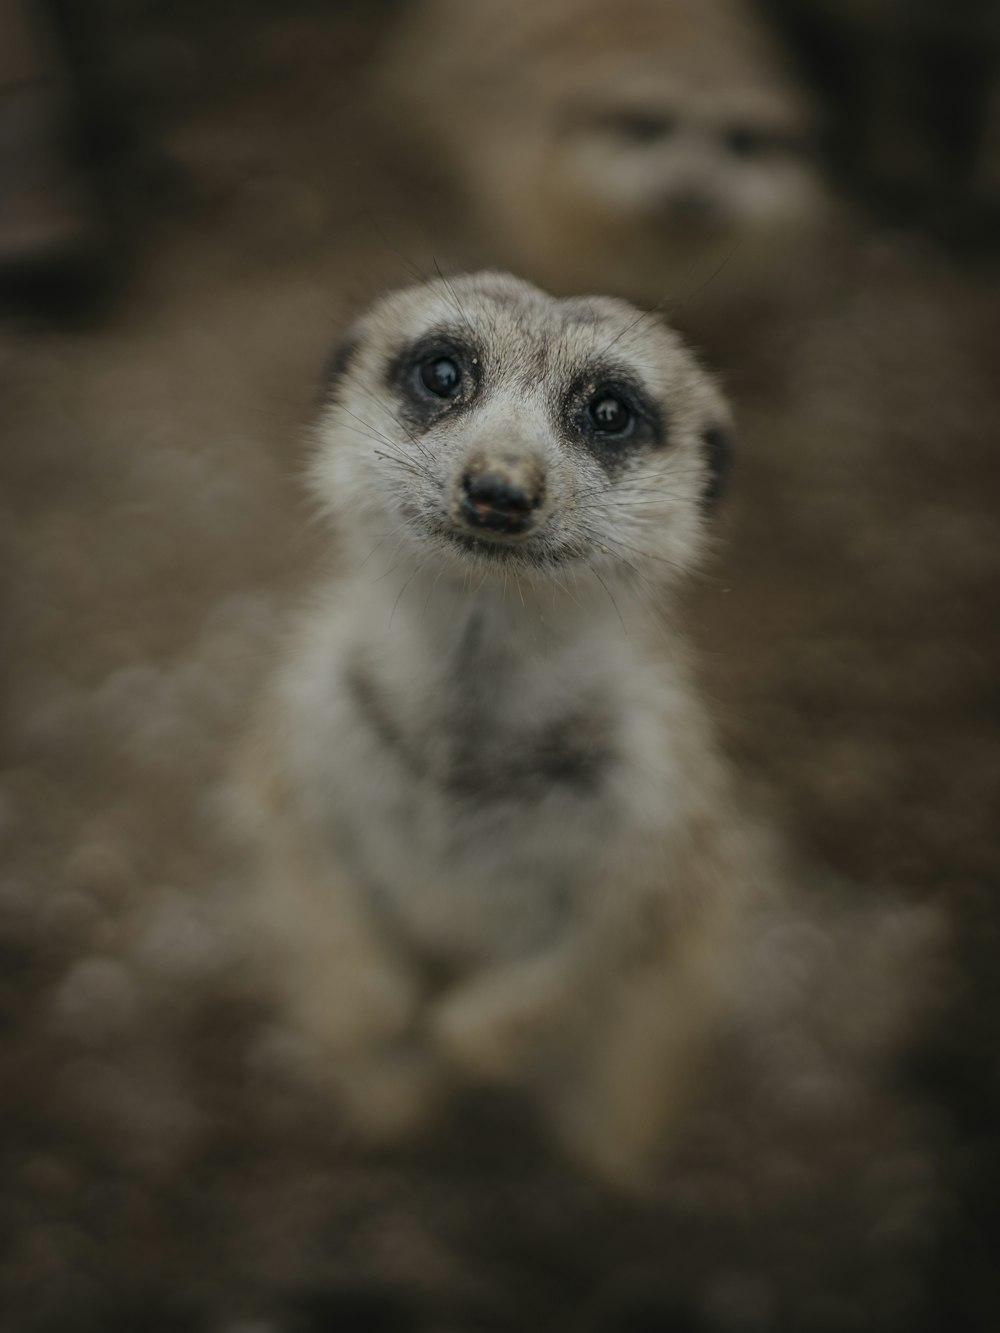 a small animal looking at the camera